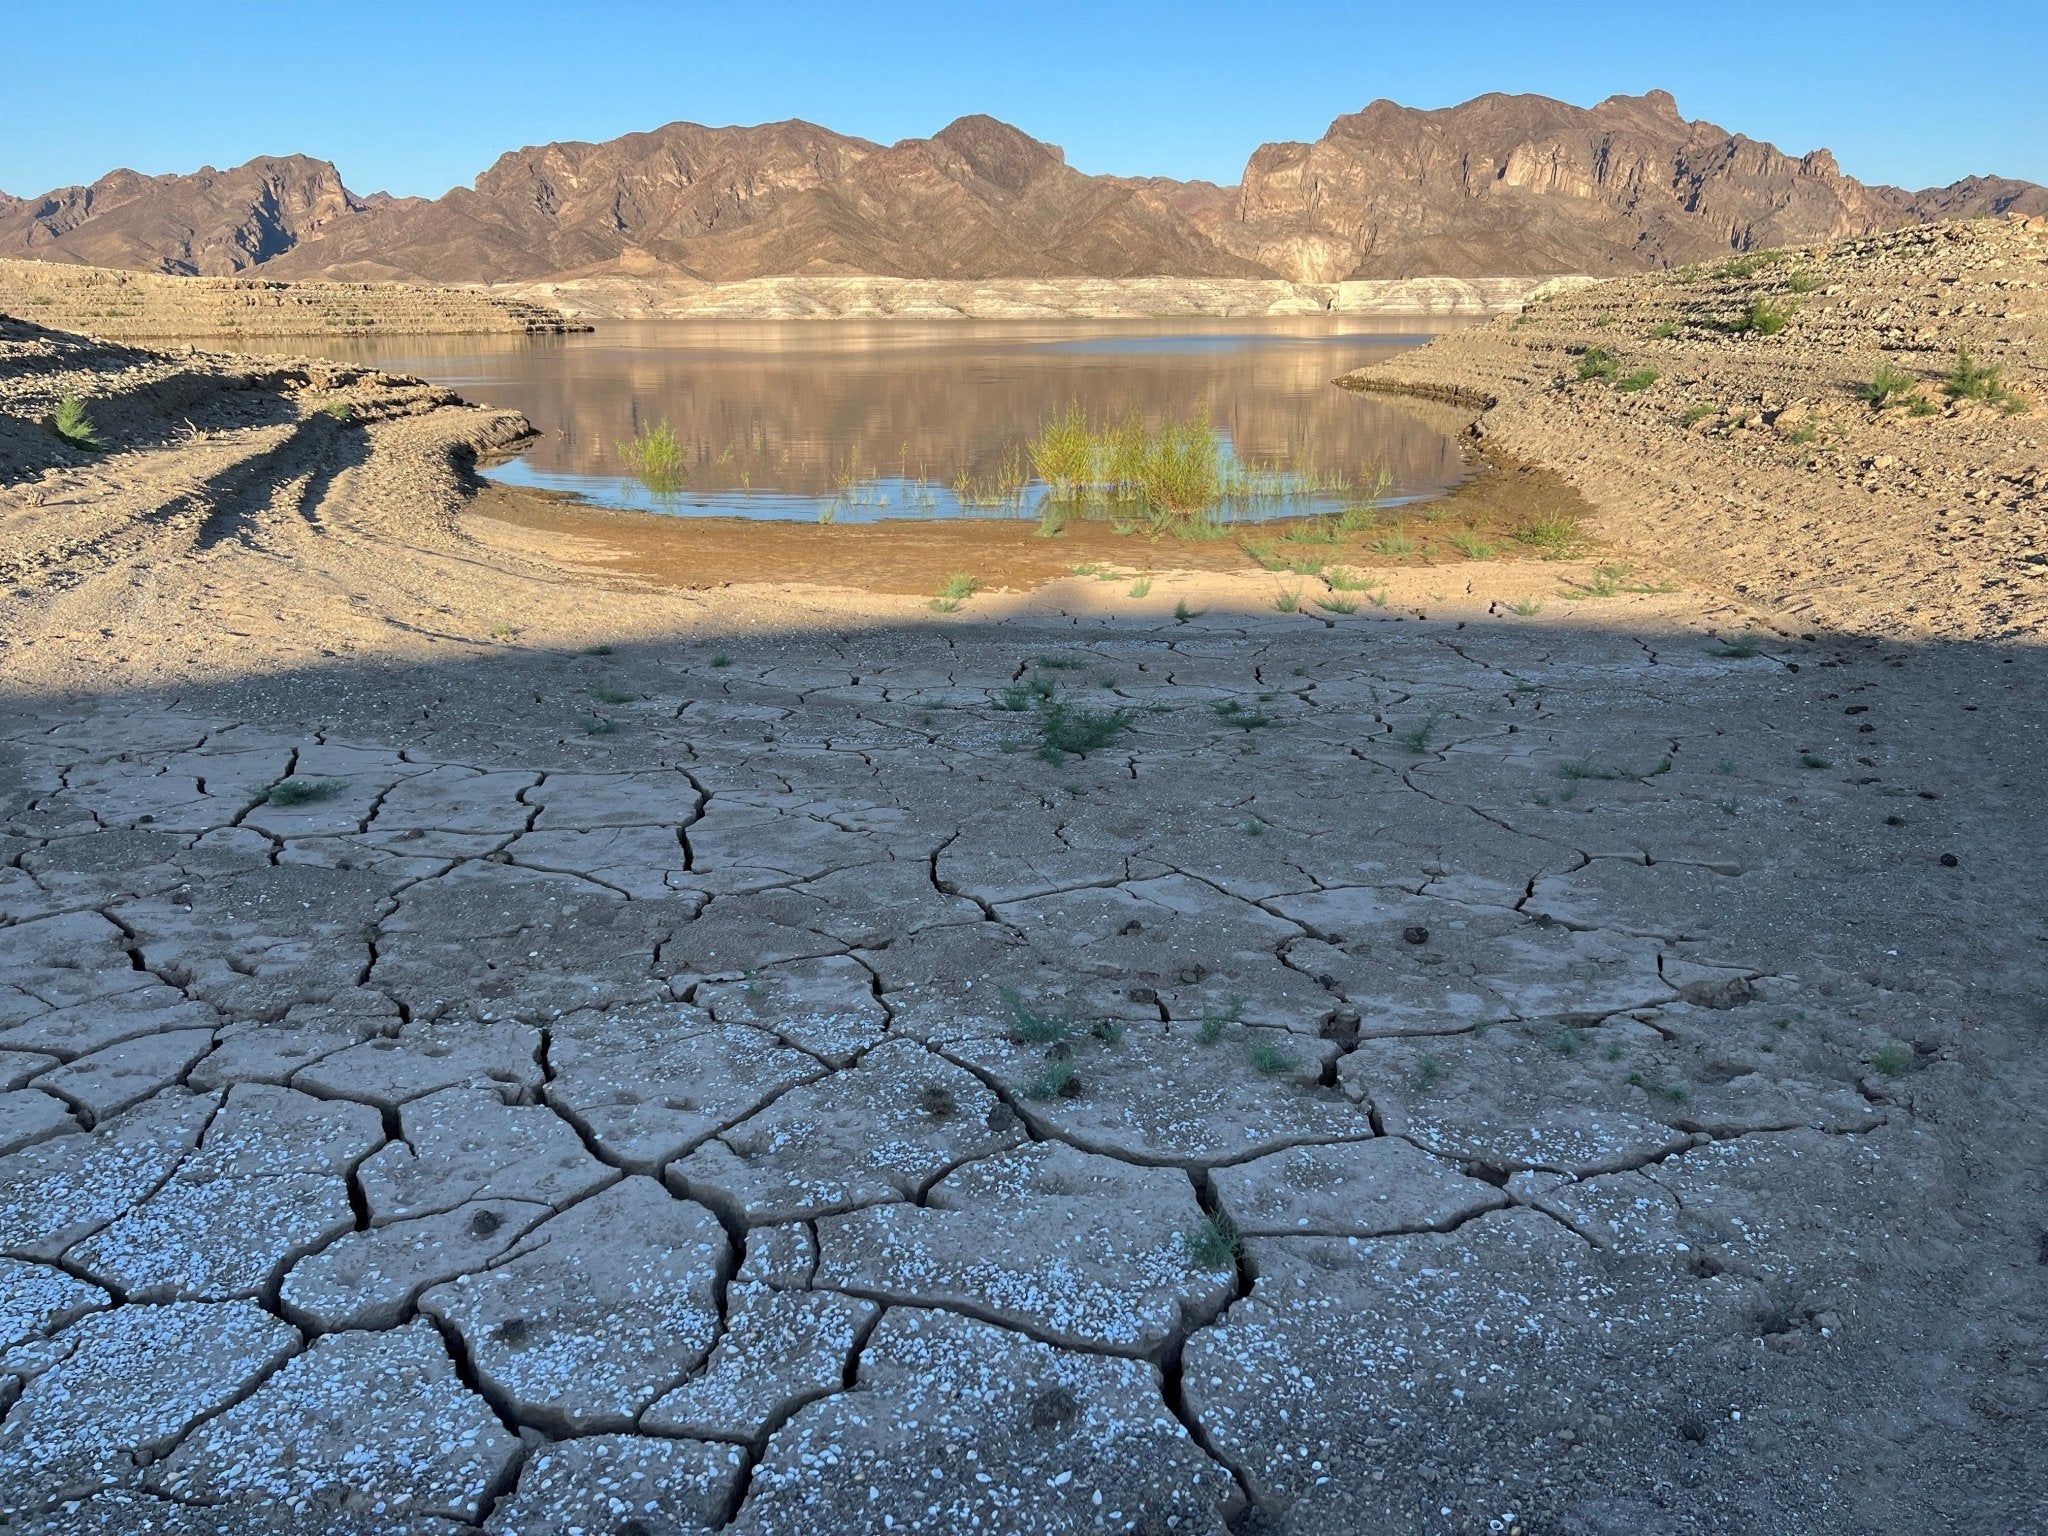 Water Woes Mount in Arizona - Scottsdale Shuts Off Water to Rio Verde - Cascadian Water